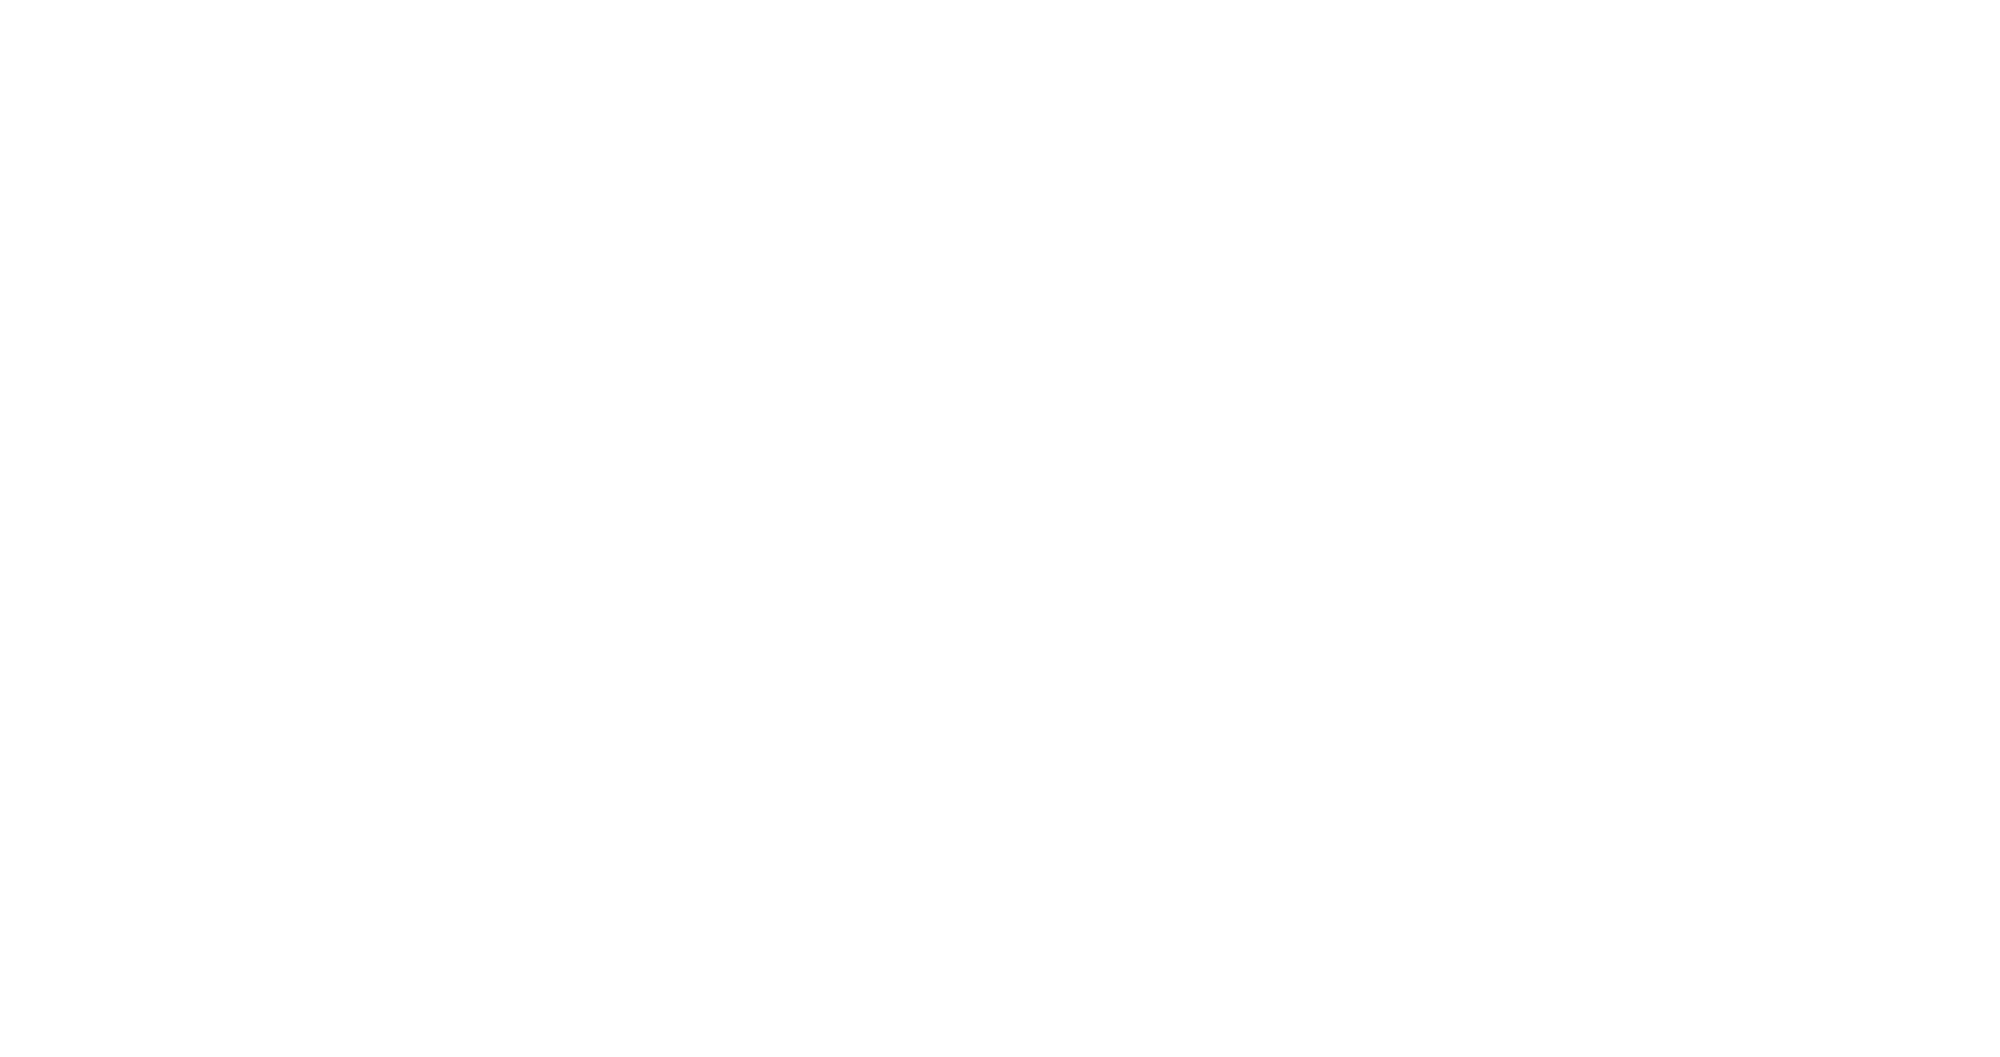 Casa San Carlo.shop